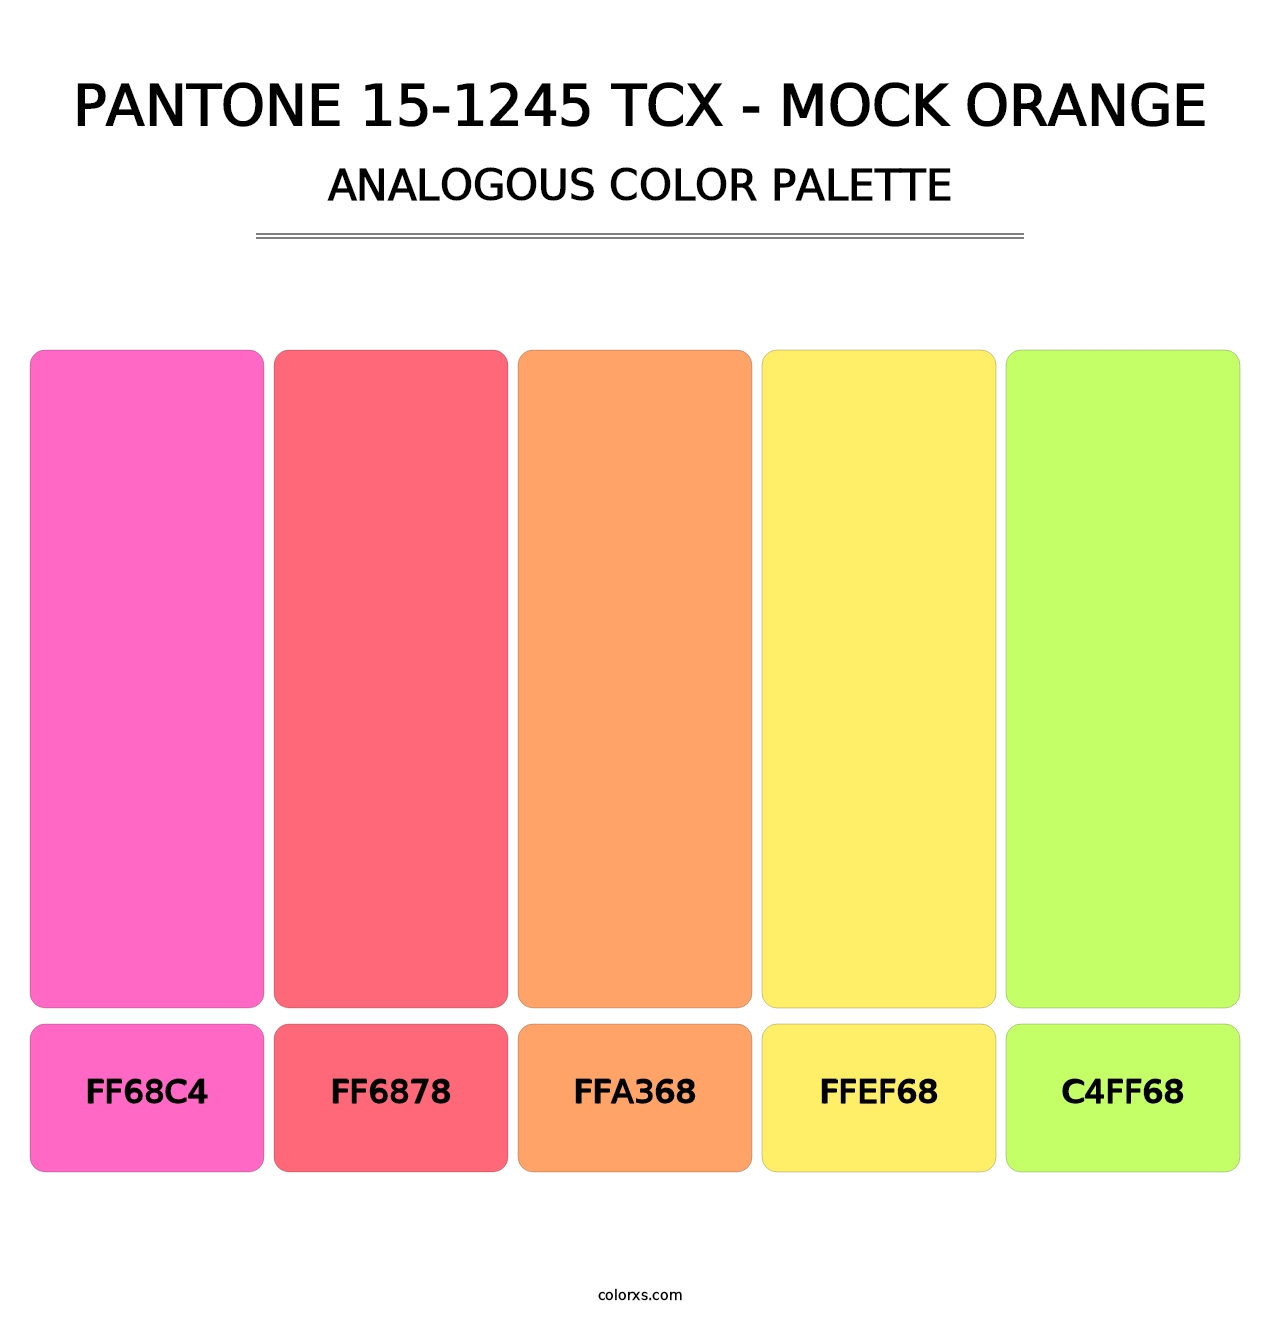 PANTONE 15-1245 TCX - Mock Orange - Analogous Color Palette